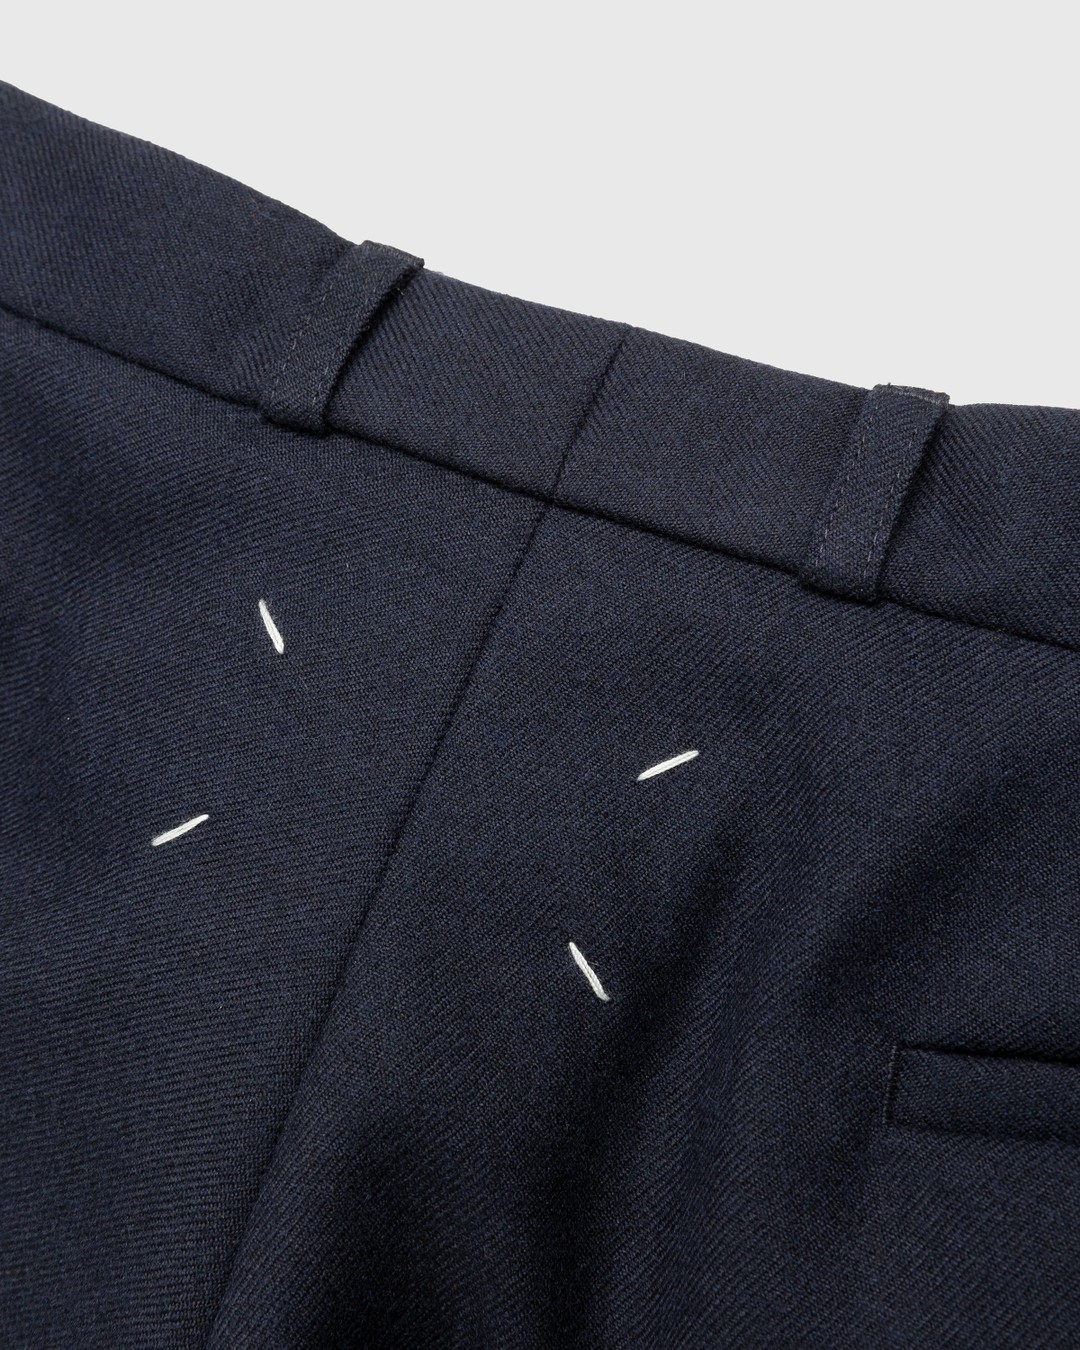 Maison Margiela – Wool Twill Trousers Navy - Trousers - Blue - Image 6